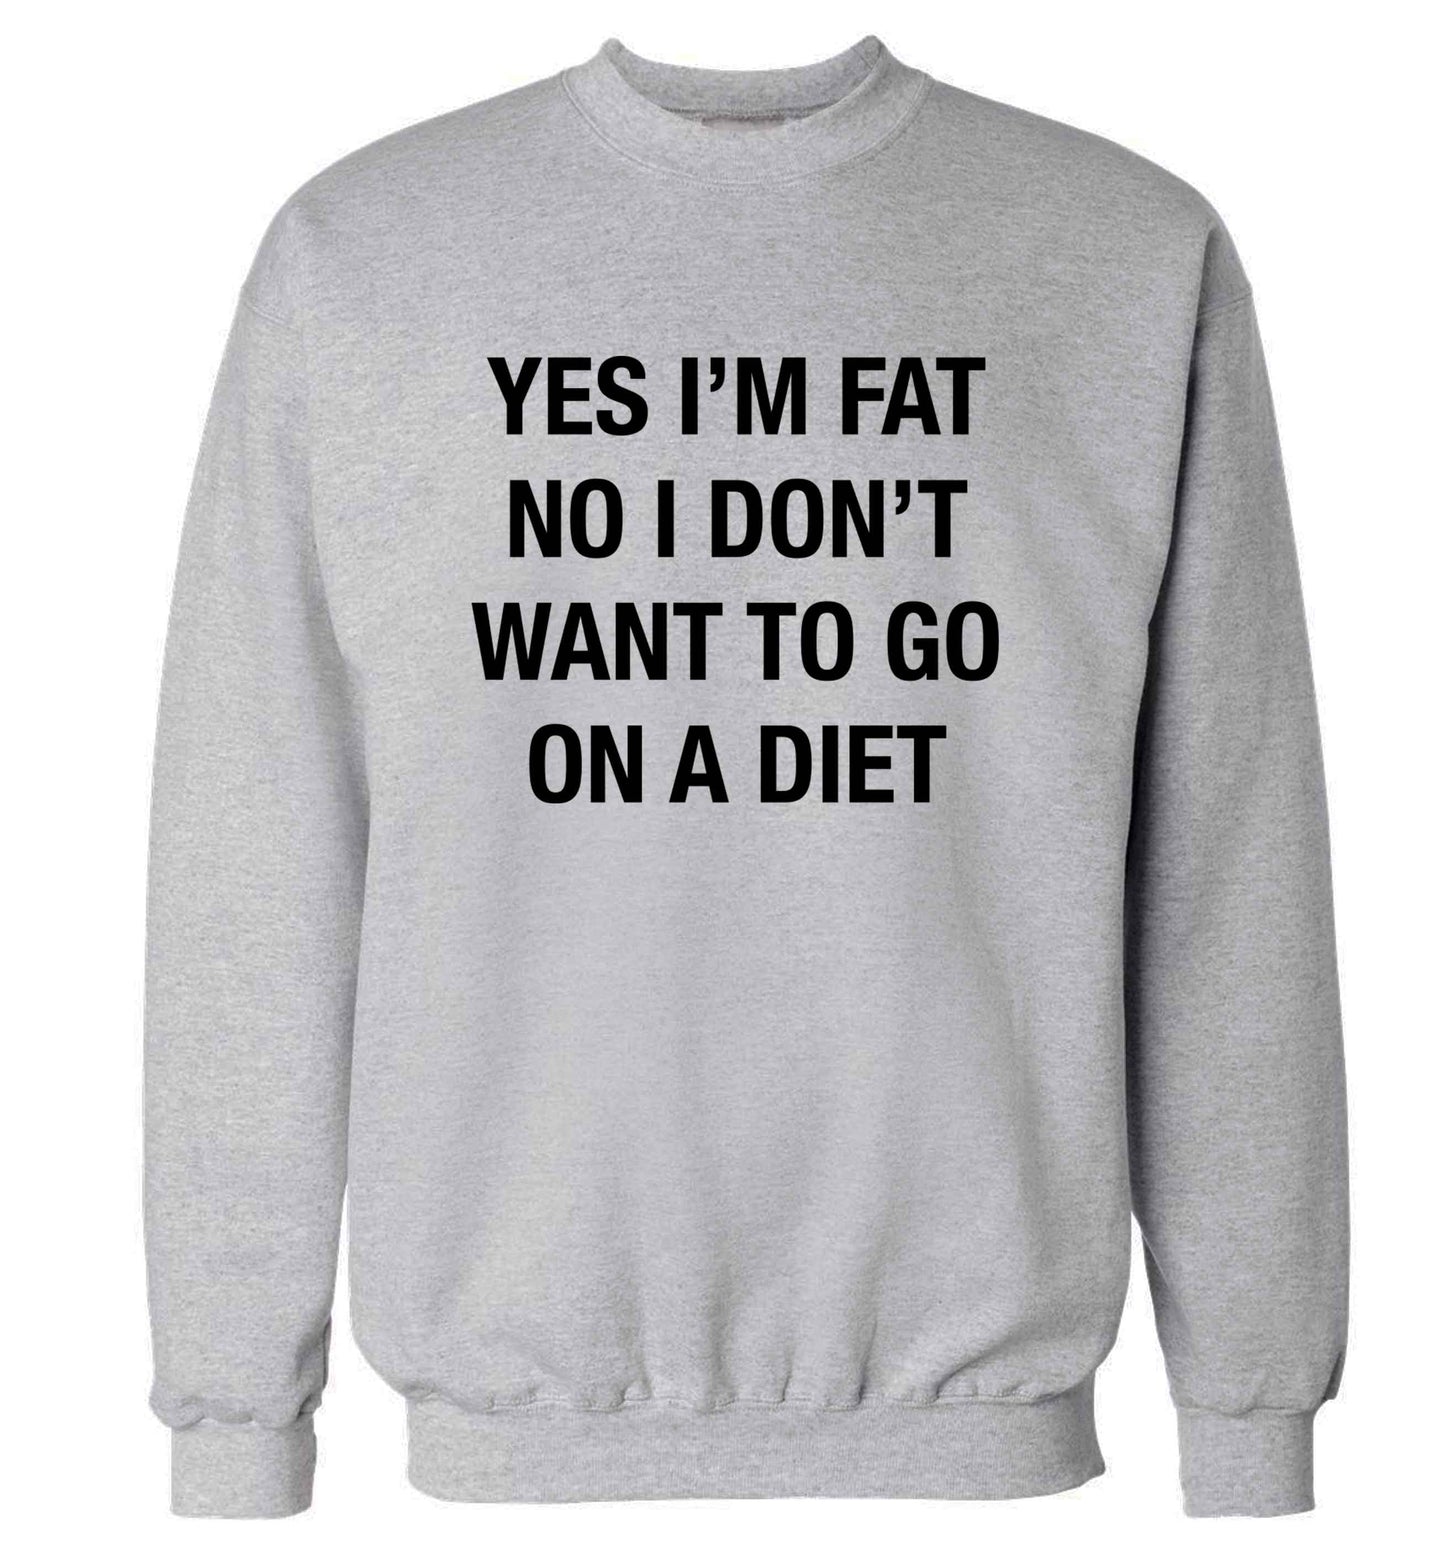 Yes I'm fat, no I don't want to go on a diet adult's unisex grey sweater 2XL